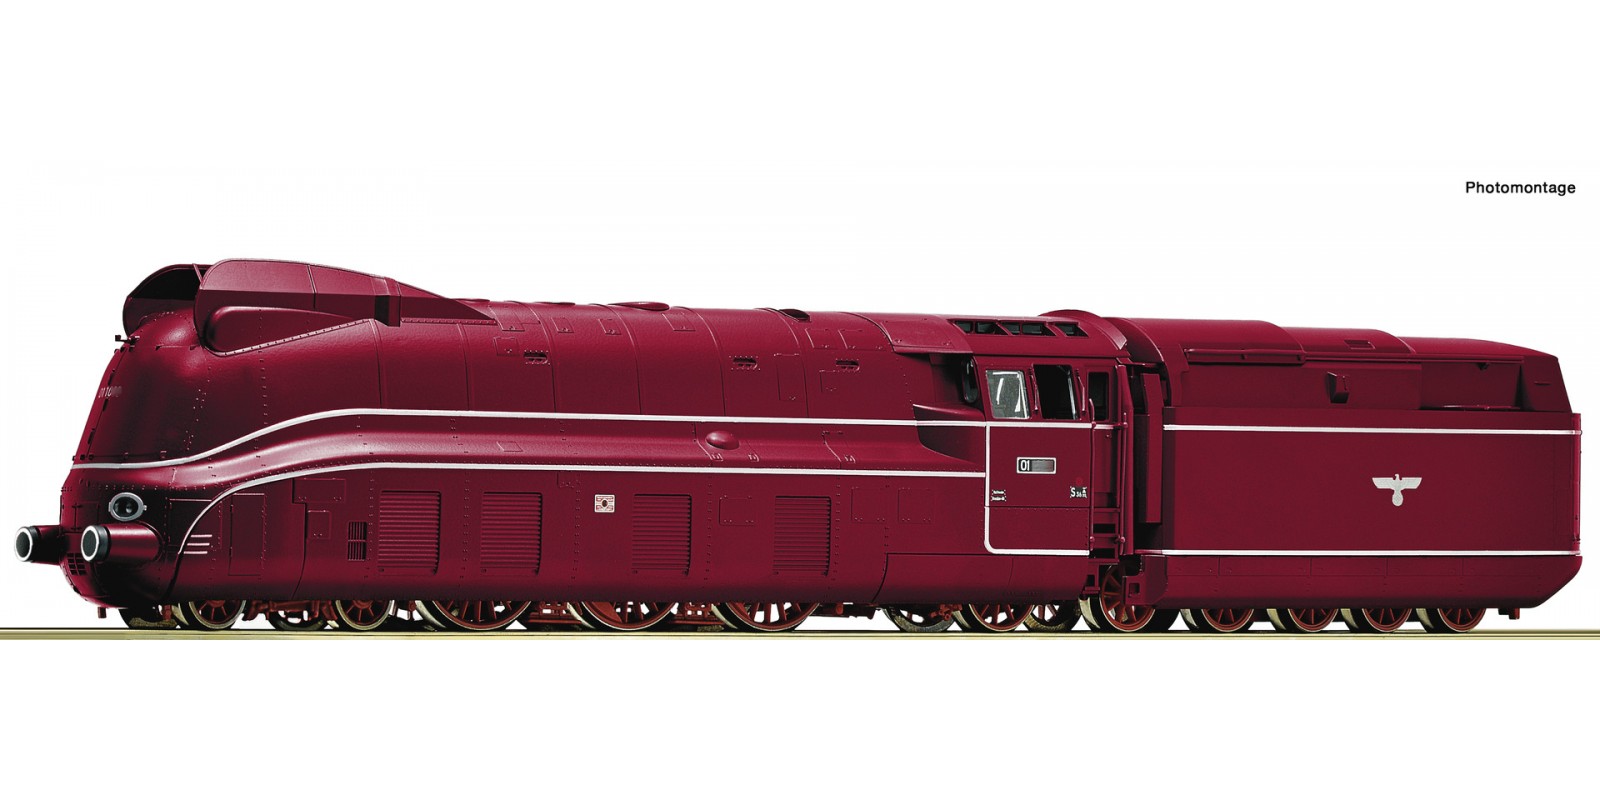 RO71205 Steam locomotive class 01.10